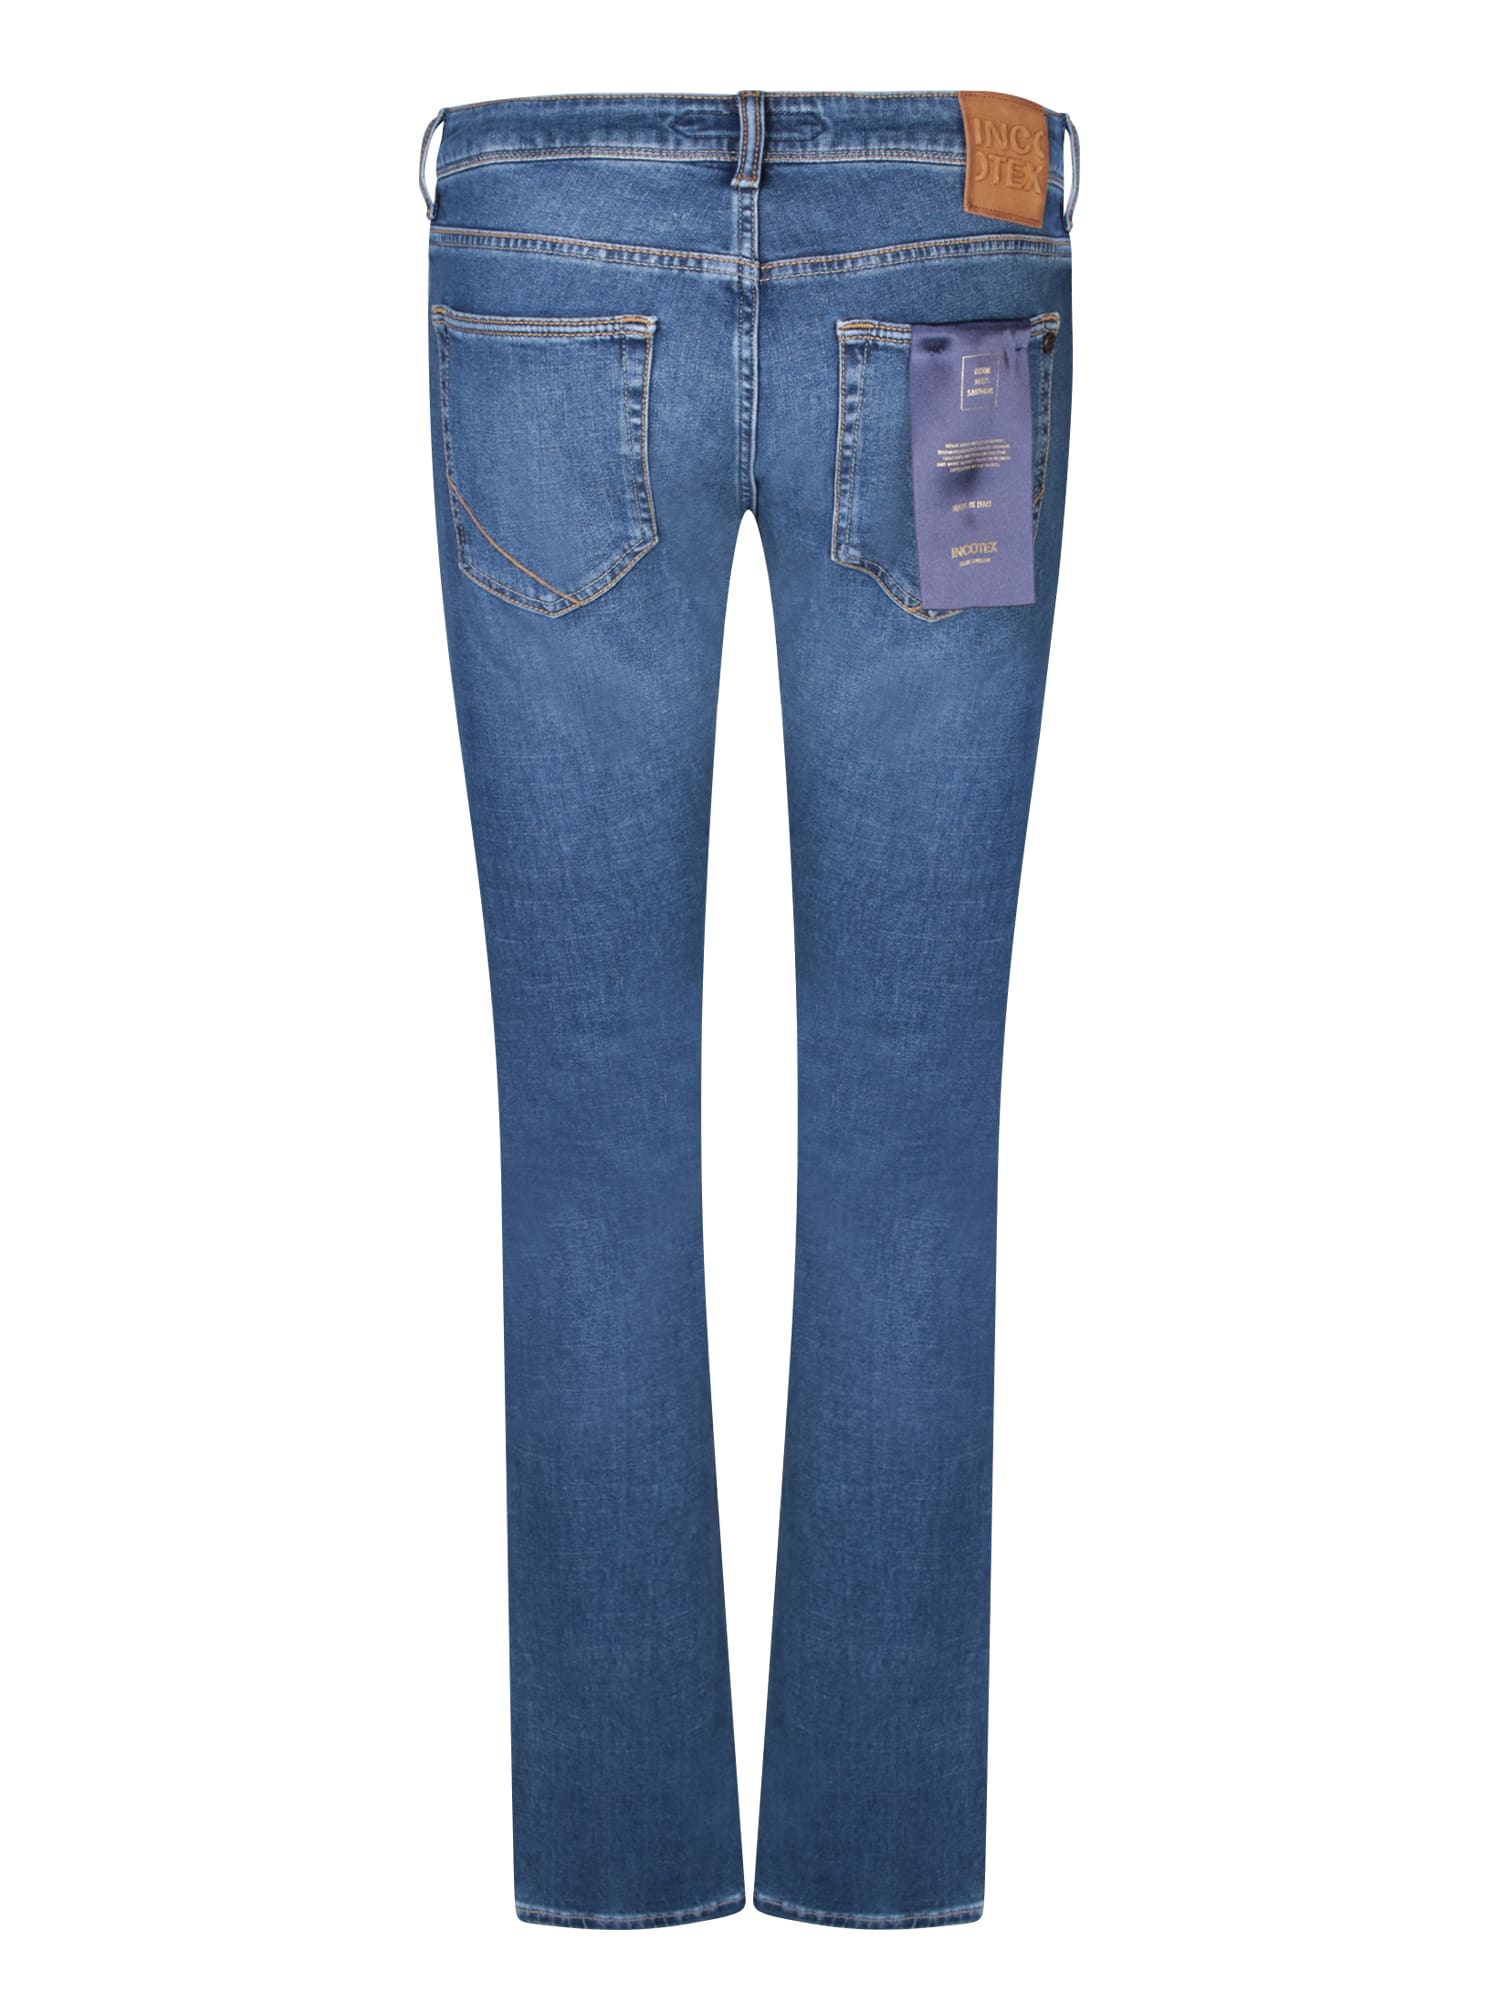 Shop Incotex 5t Baffo Blue Denim Jeans